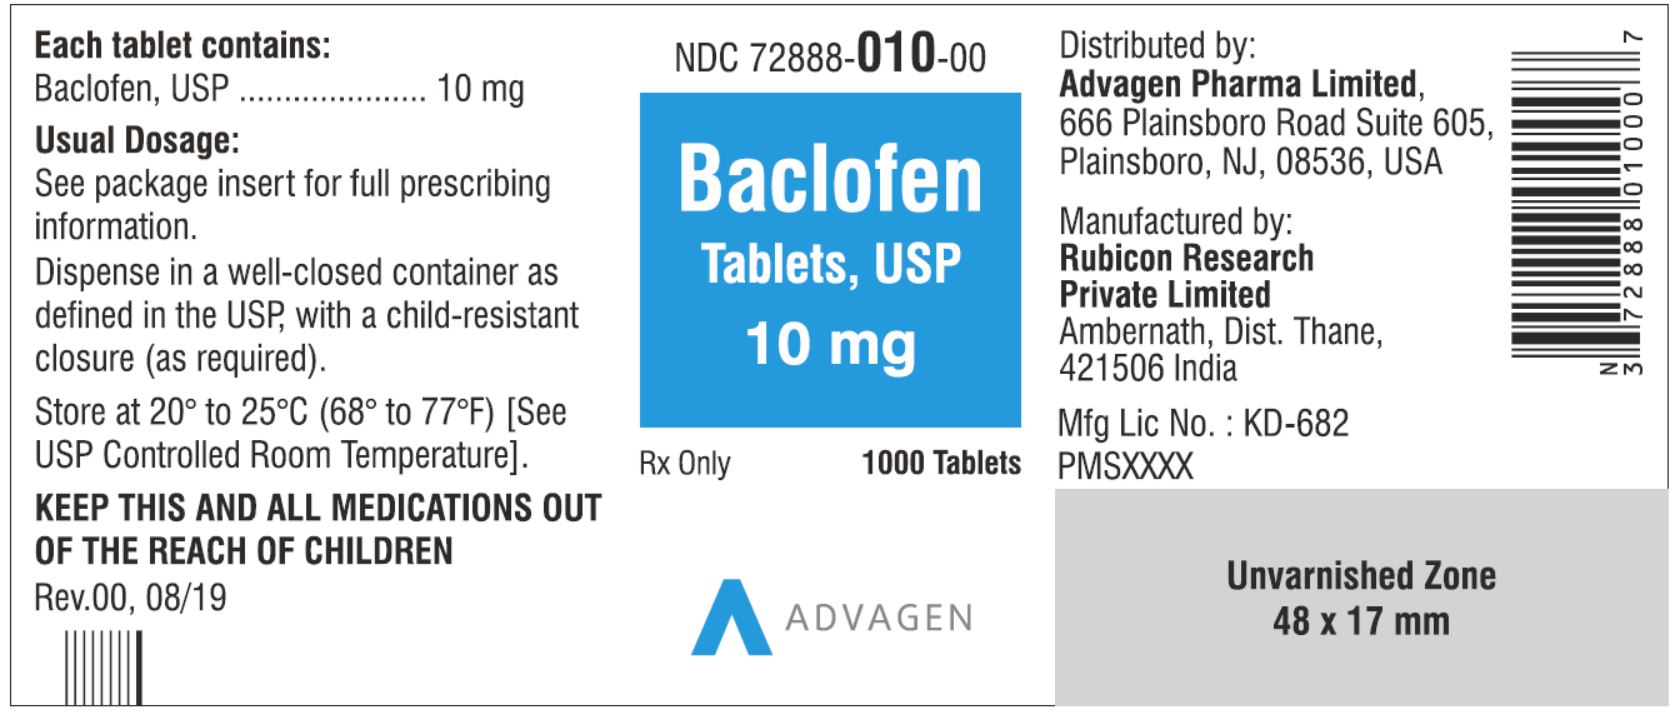 NDC 72888-010-00 - Baclofen Tablets, USP 10 mg - 1000 Tablets